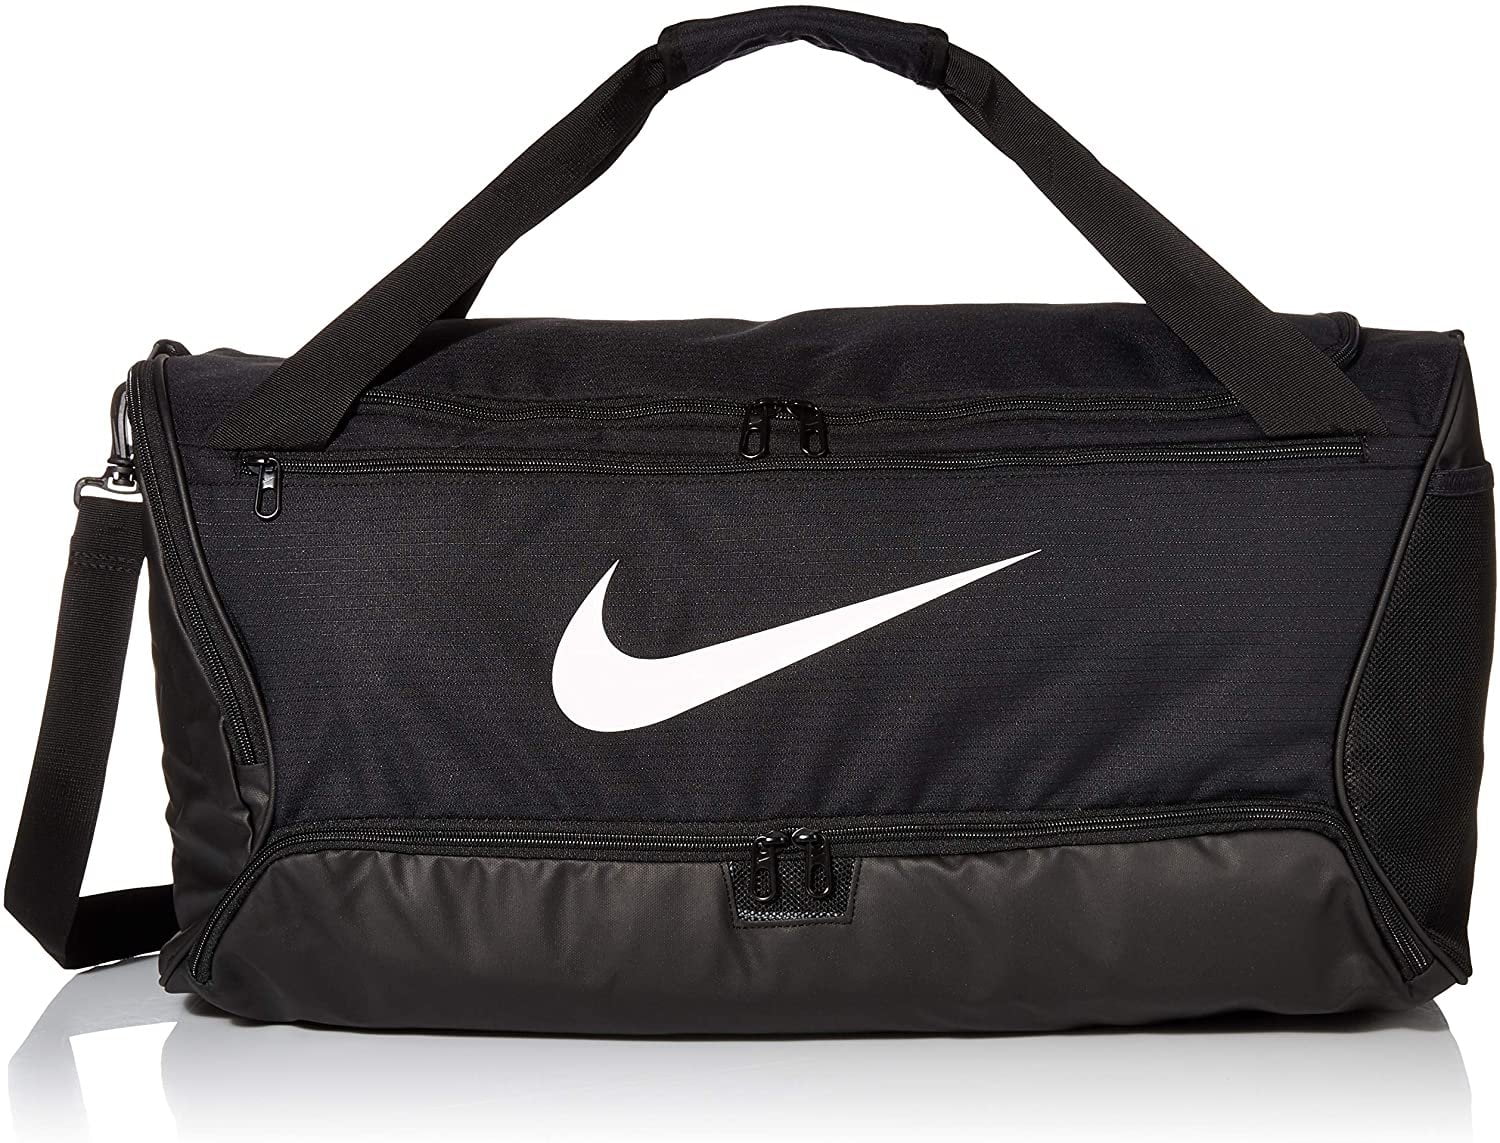 Nike Brasilia Medium Duffle Bag, Black/White - Walmart.com